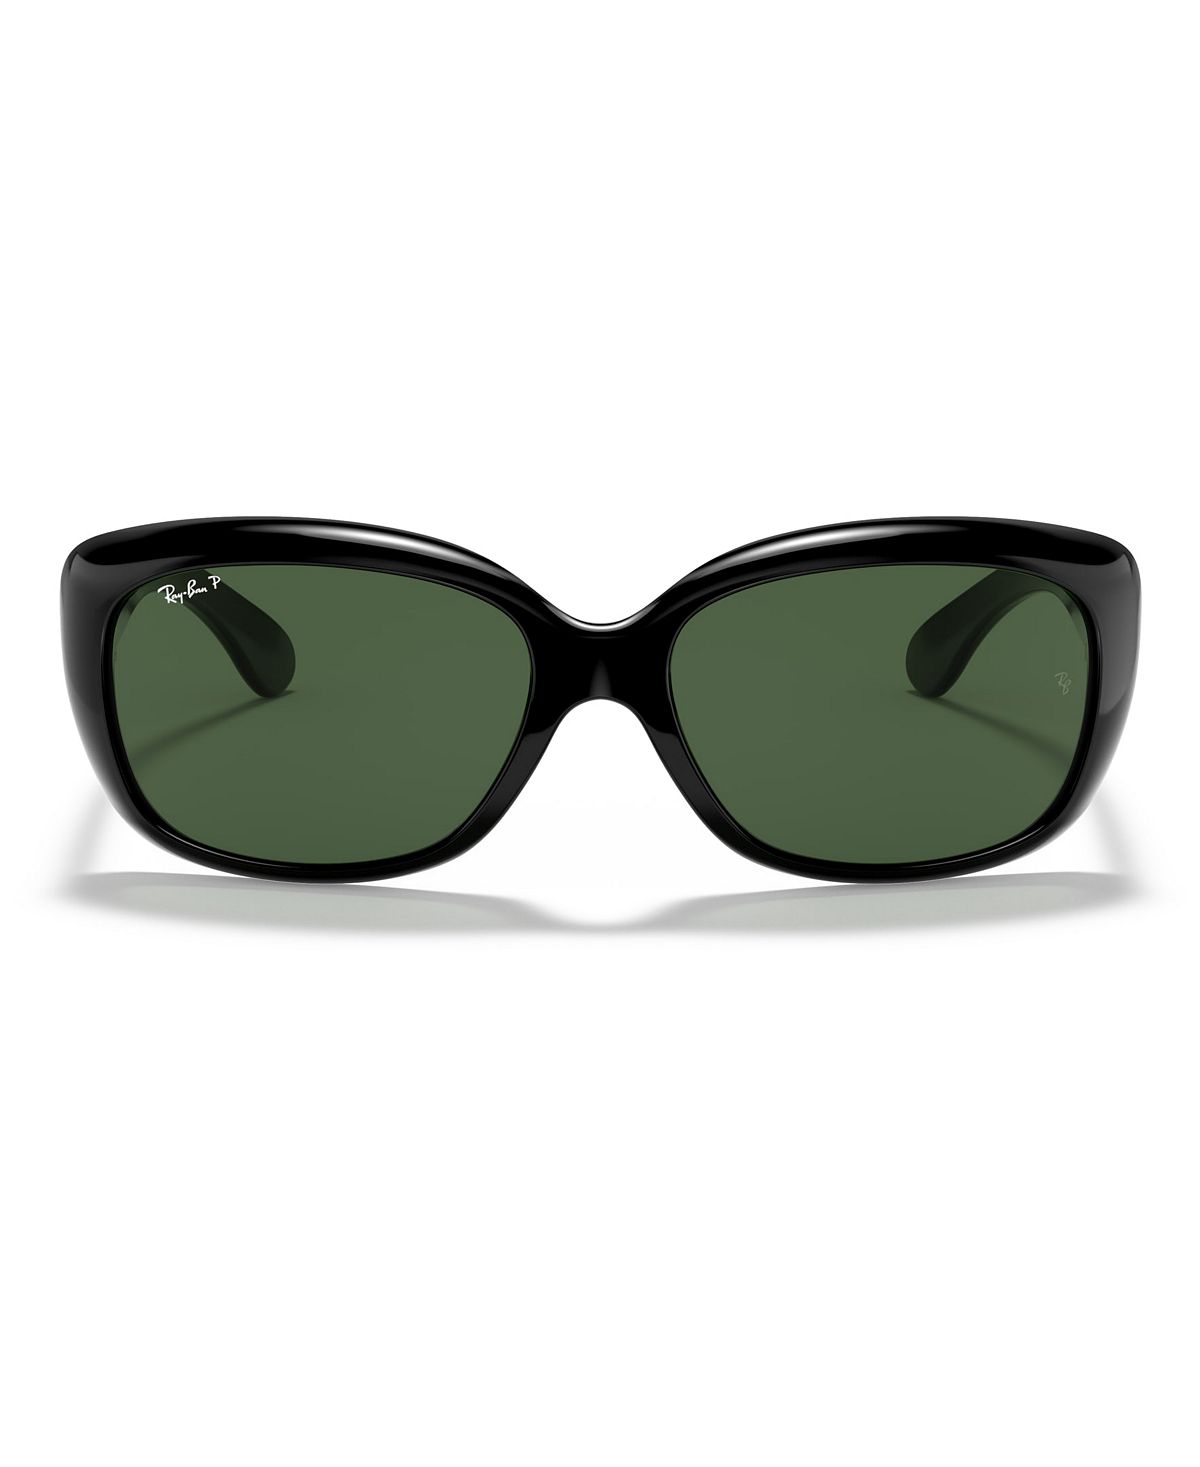 Поляризационные солнцезащитные очки, RB4101 JACKIE OHH Ray-Ban солнцезащитные очки ray ban 4101 601 t3 jackie ohh